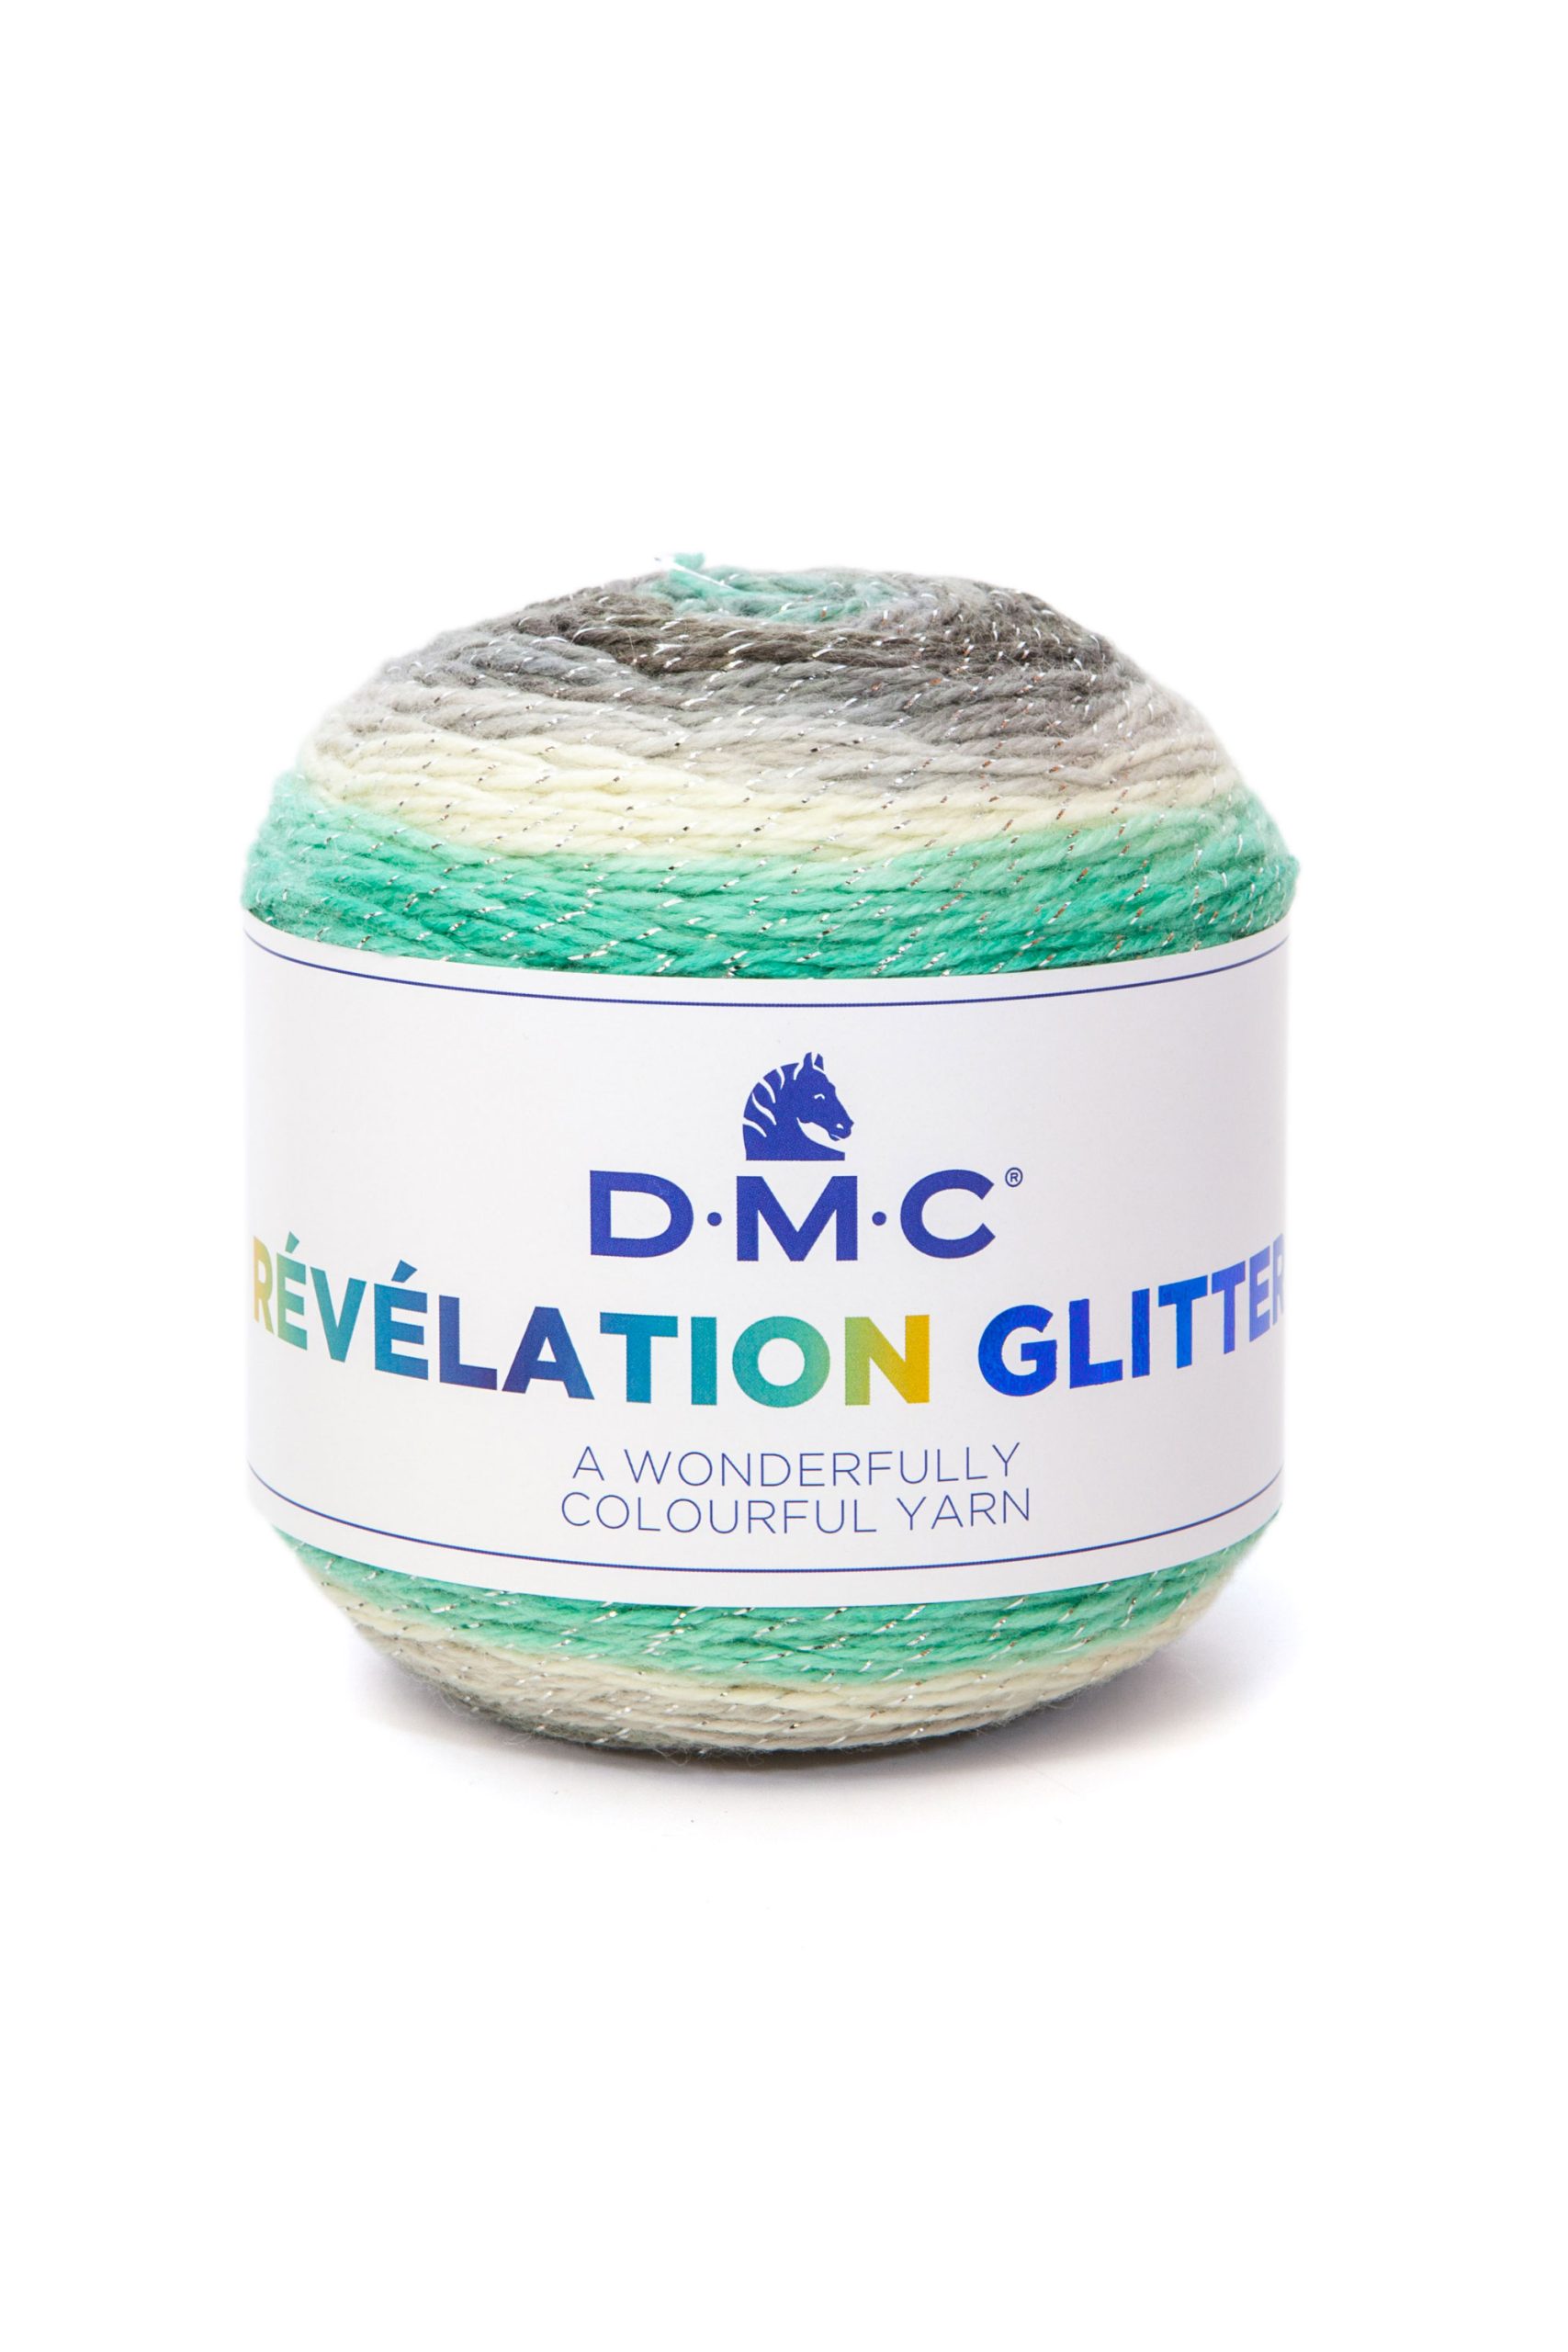 Lana Dmc Revelation Glitter Colore 505